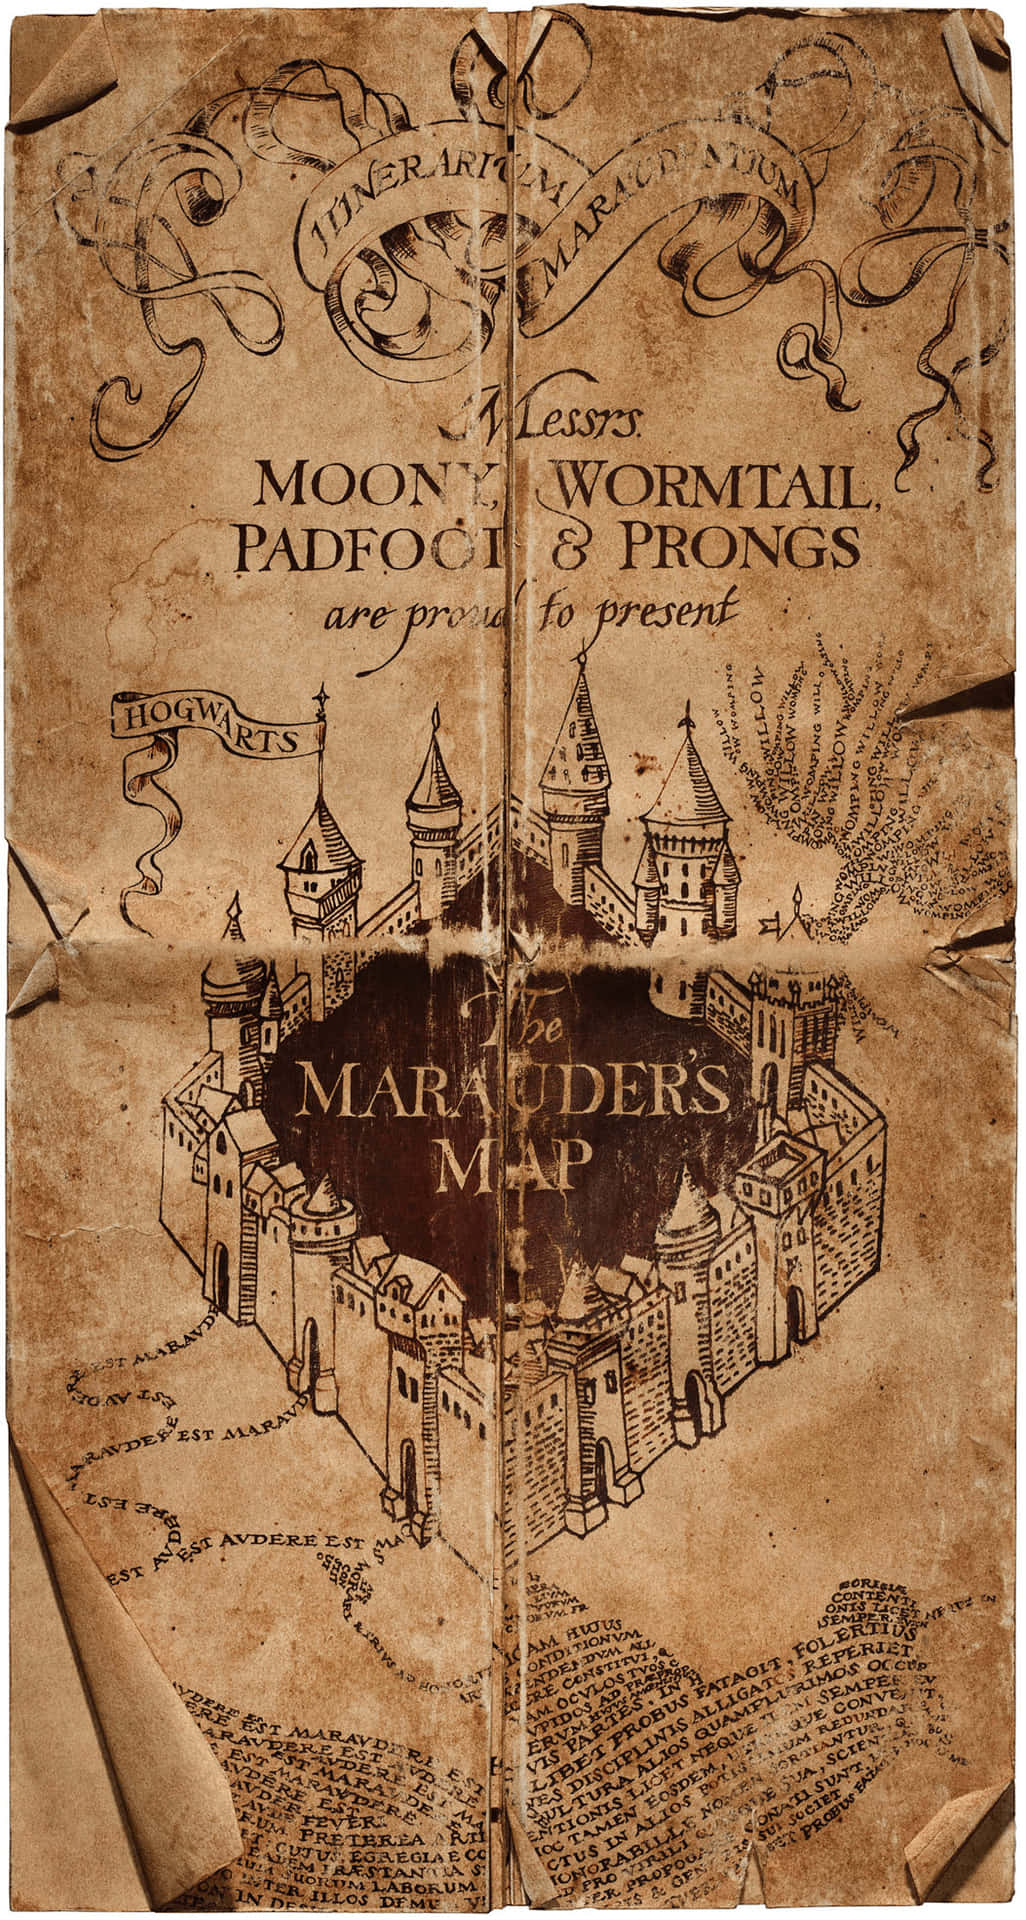 Follow The Marauder's Map to Your Next Adventure Wallpaper